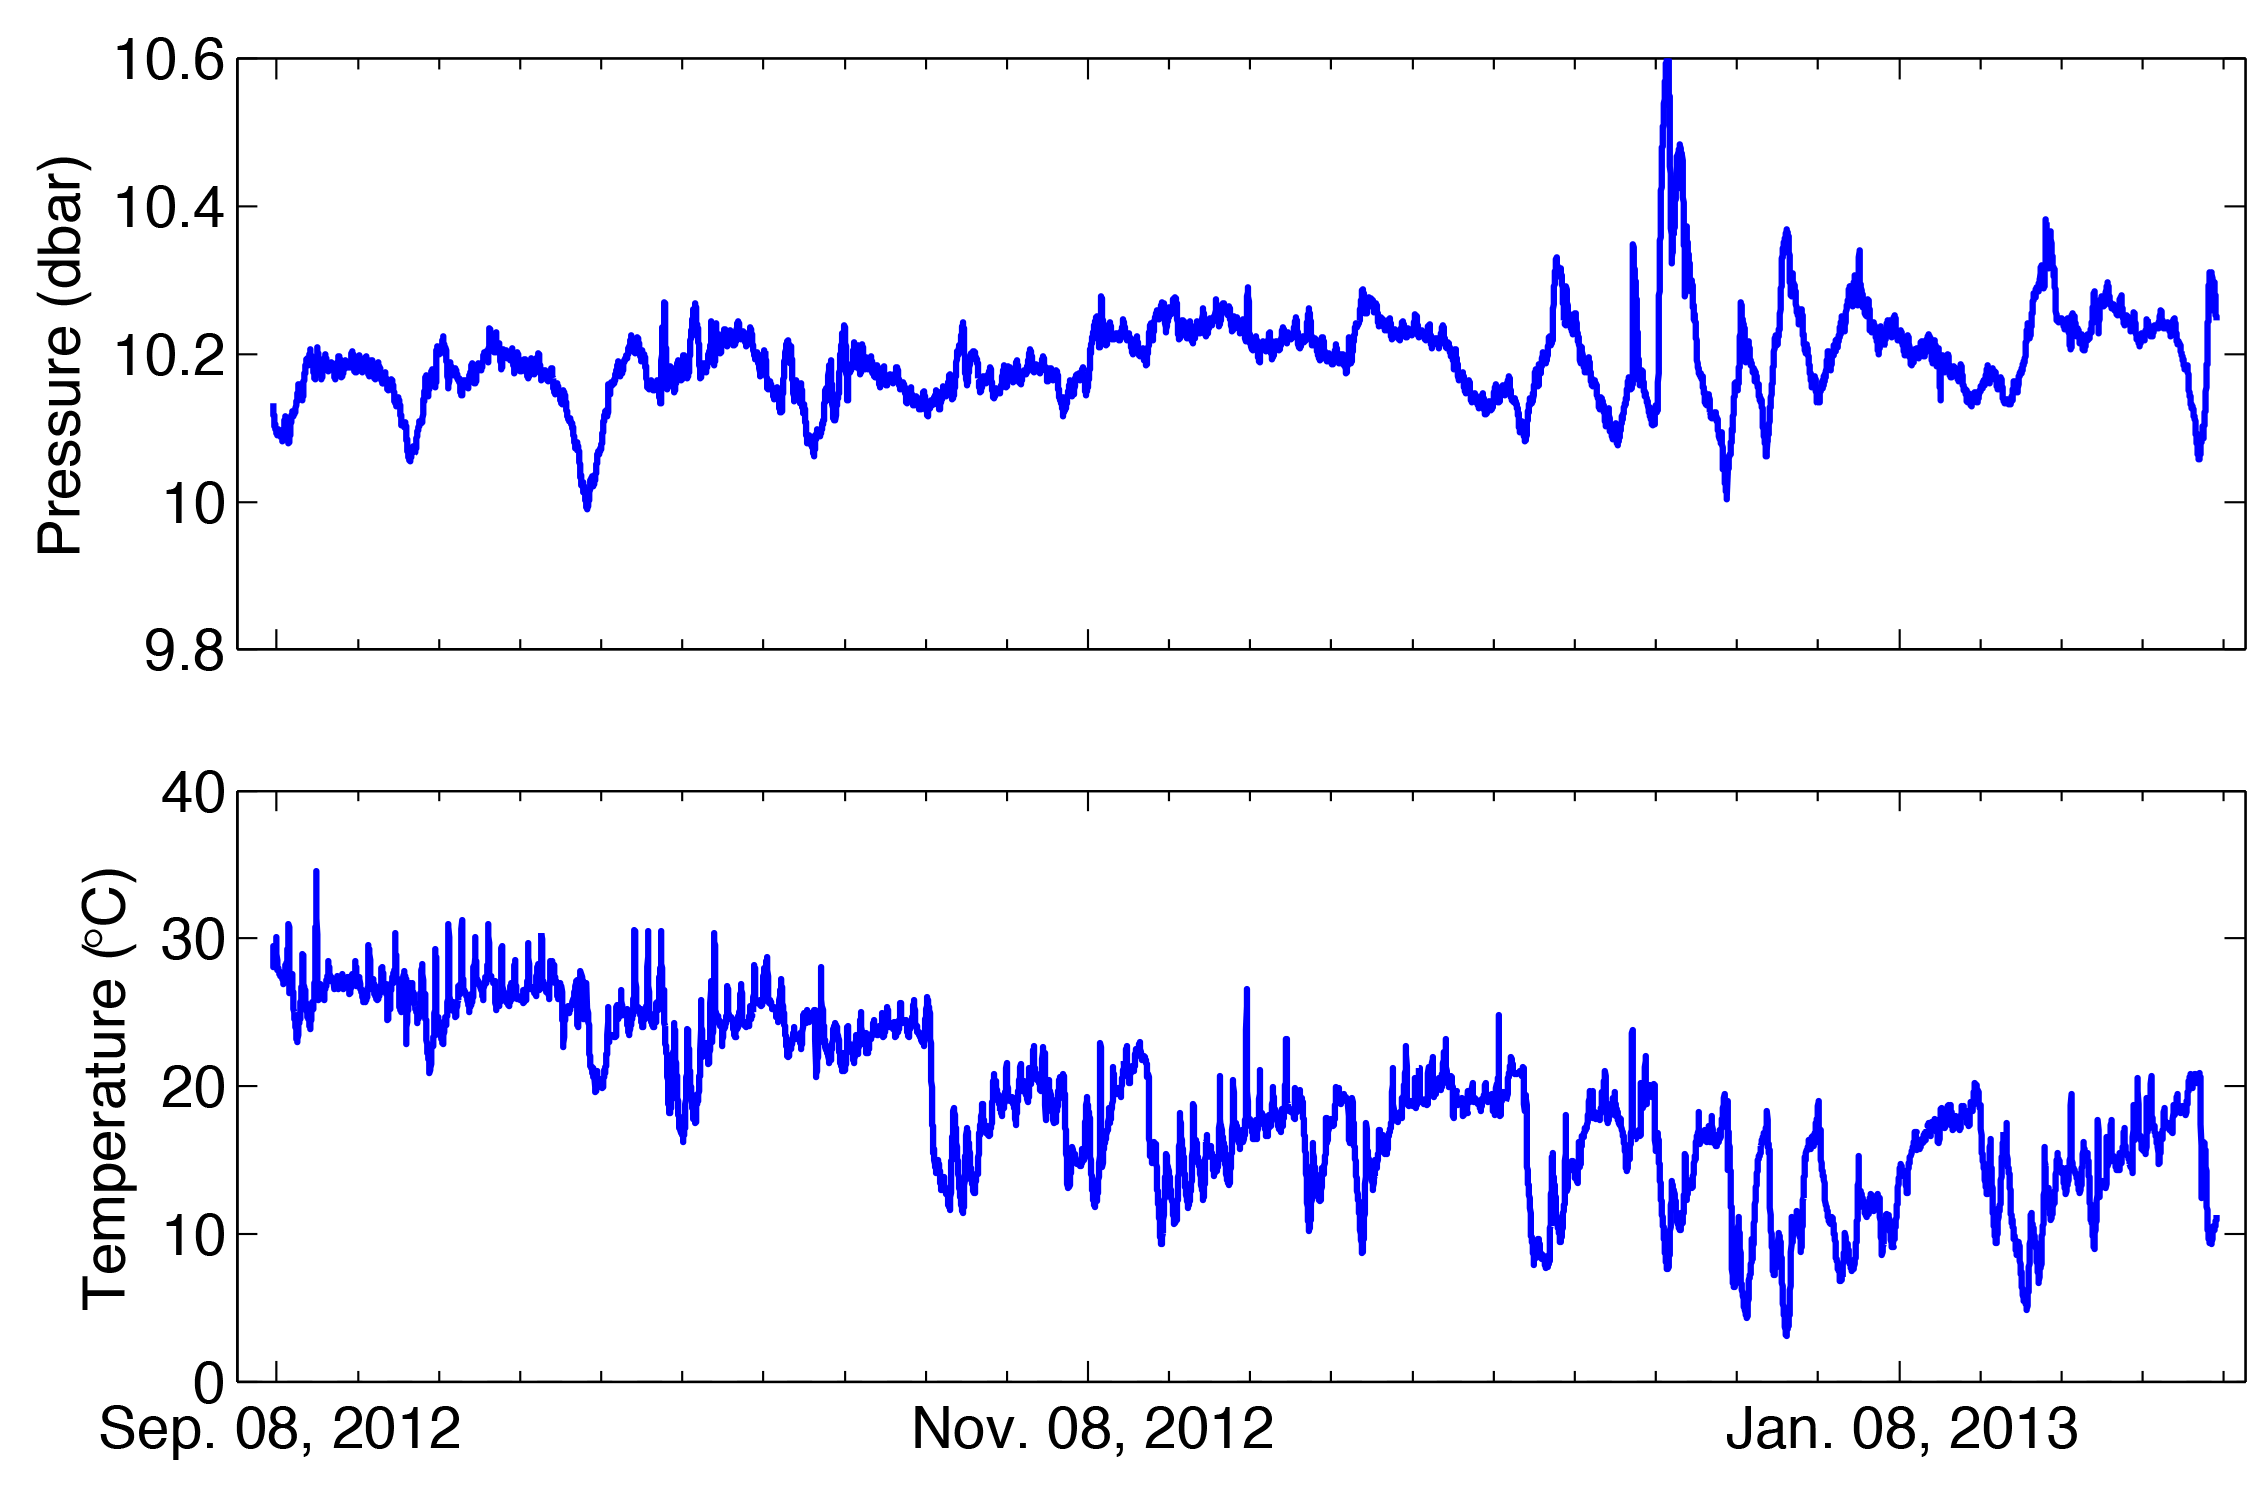 atmospheric pressure and temperature time series